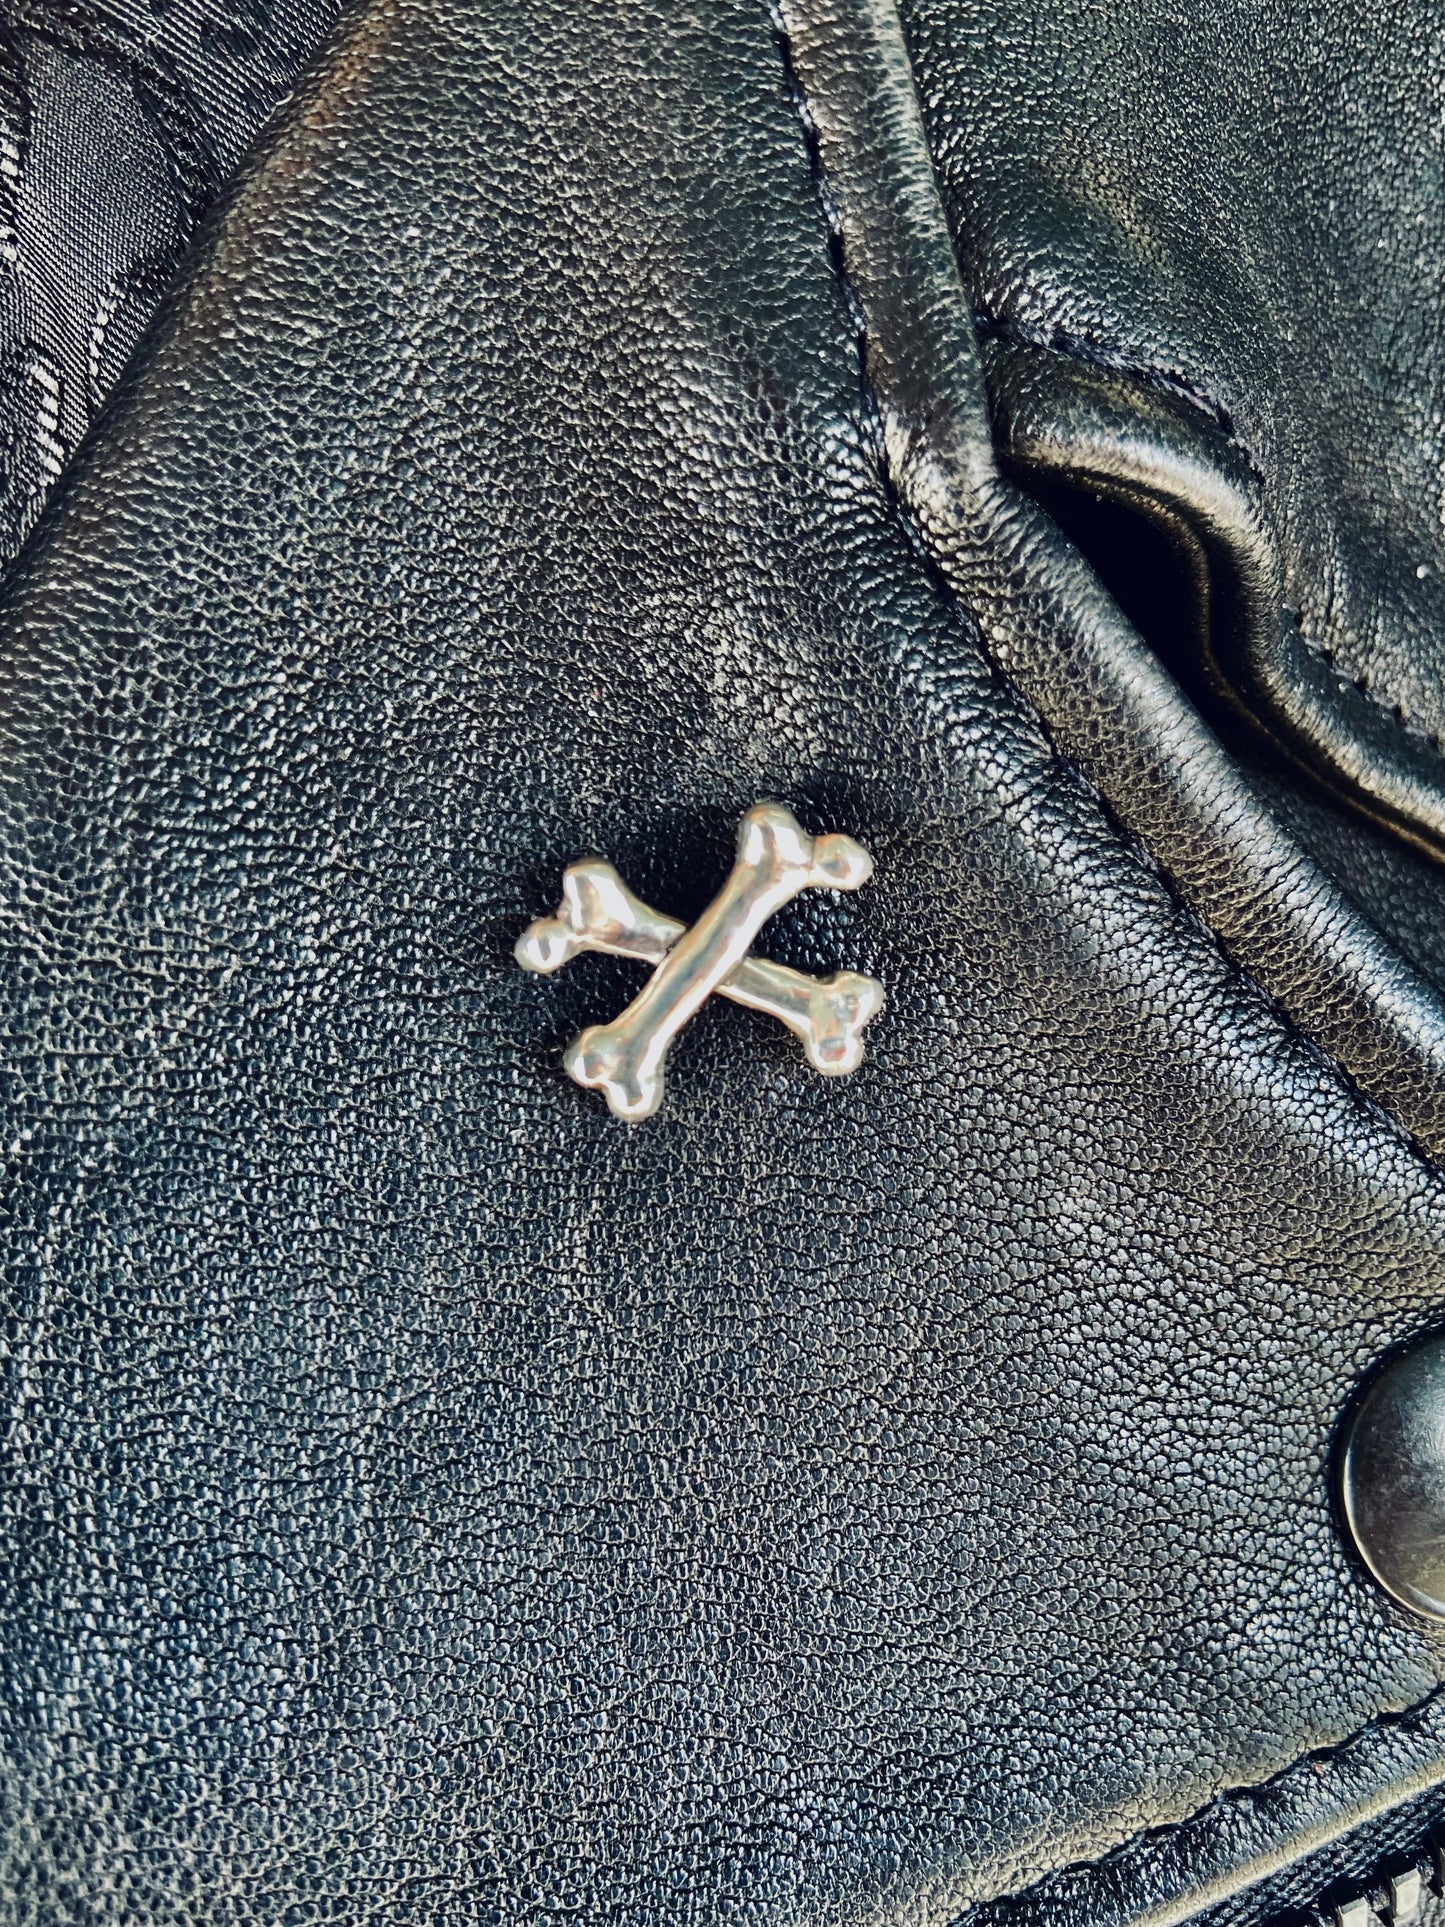 Crossbones Pin